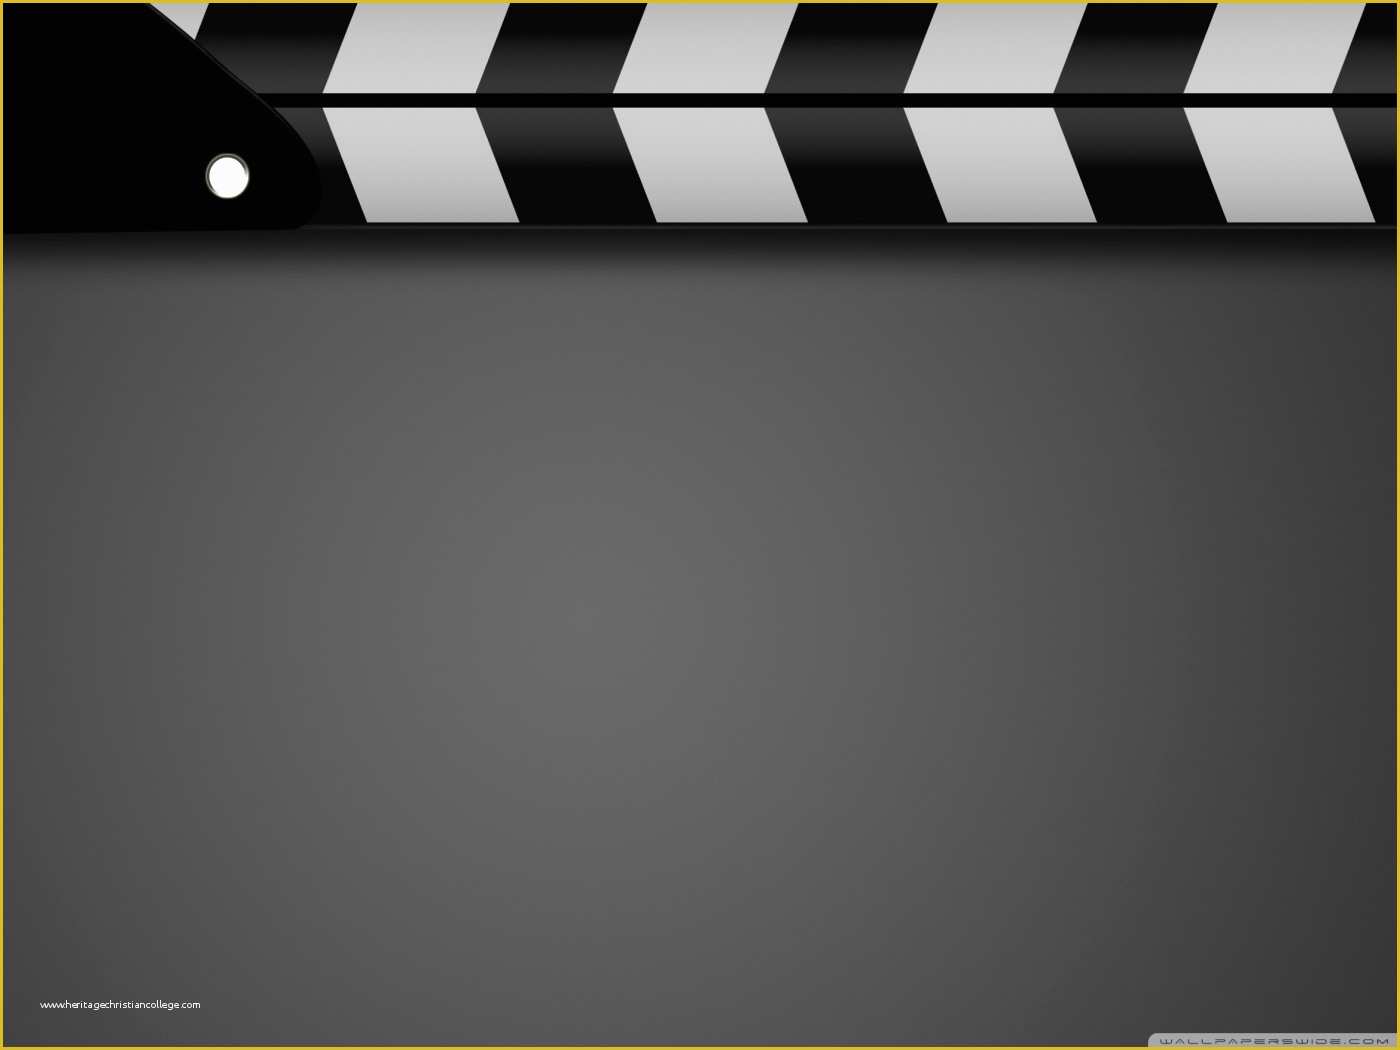 Video Background Template Free Download Of Movie Clapper 4k Hd Desktop Wallpaper for 4k Ultra Hd Tv